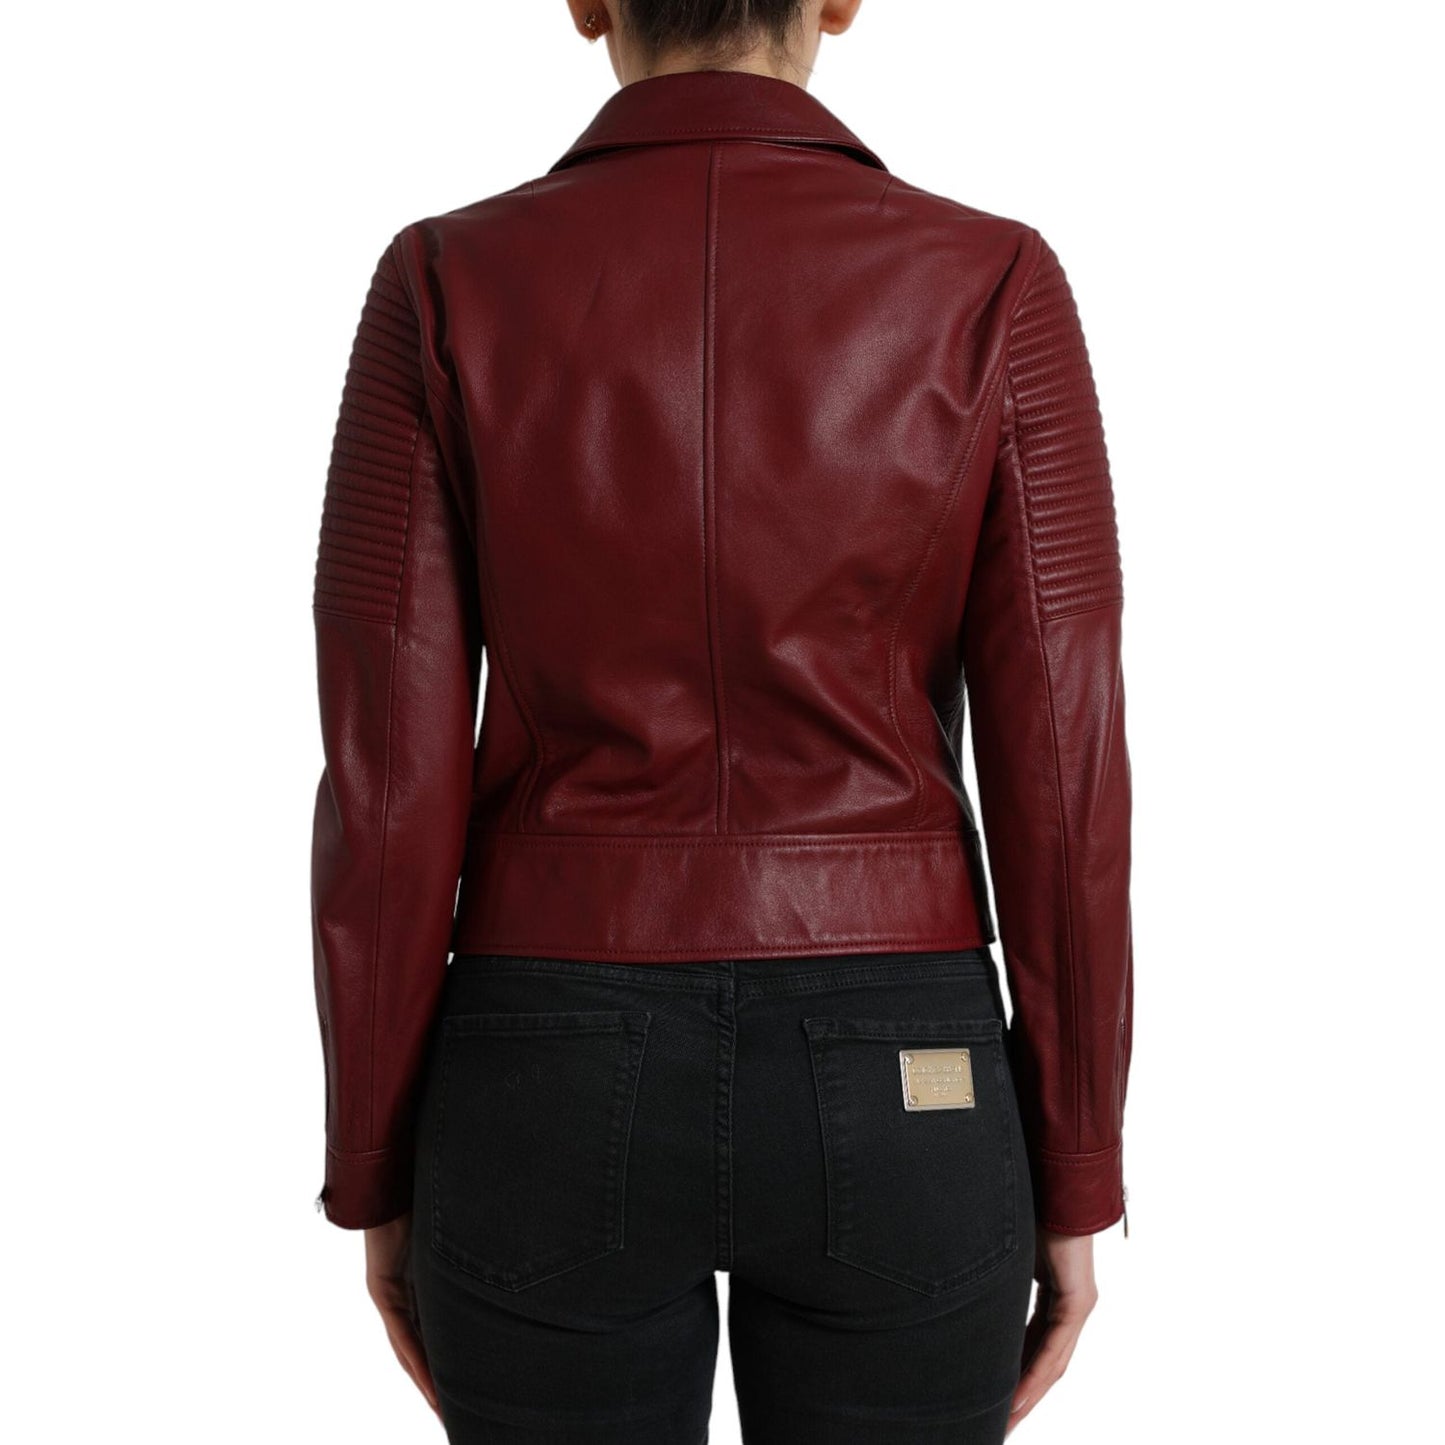 Dolce & Gabbana Bordeaux Biker Leather Jacket bordeaux-leather-biker-coat-lambskin-jacket 465A9335-BG-scaled-4dd72bda-168.jpg